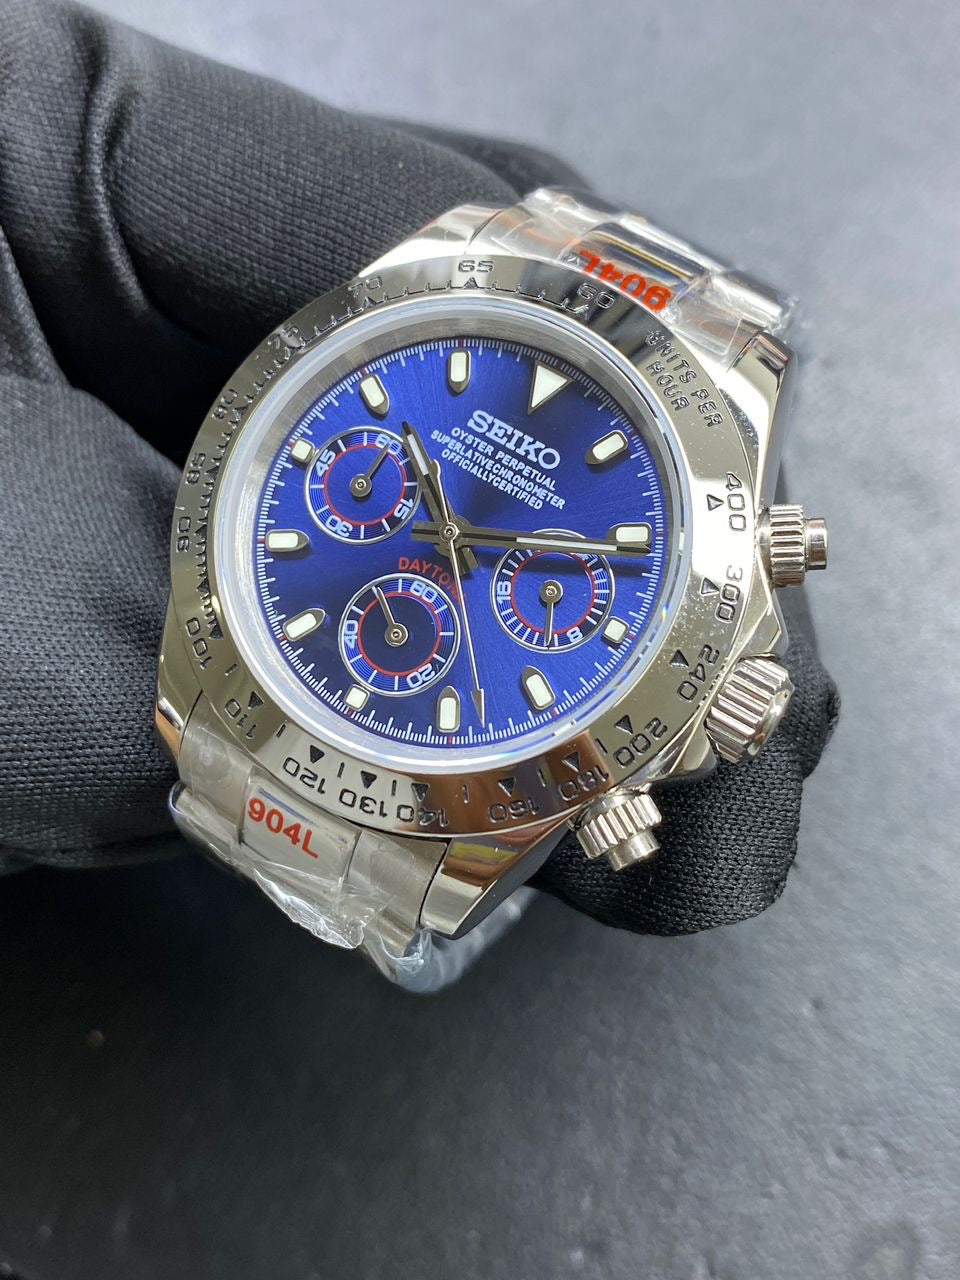 Seiko mod silver Daytona blue dial VK63 chronograph watch